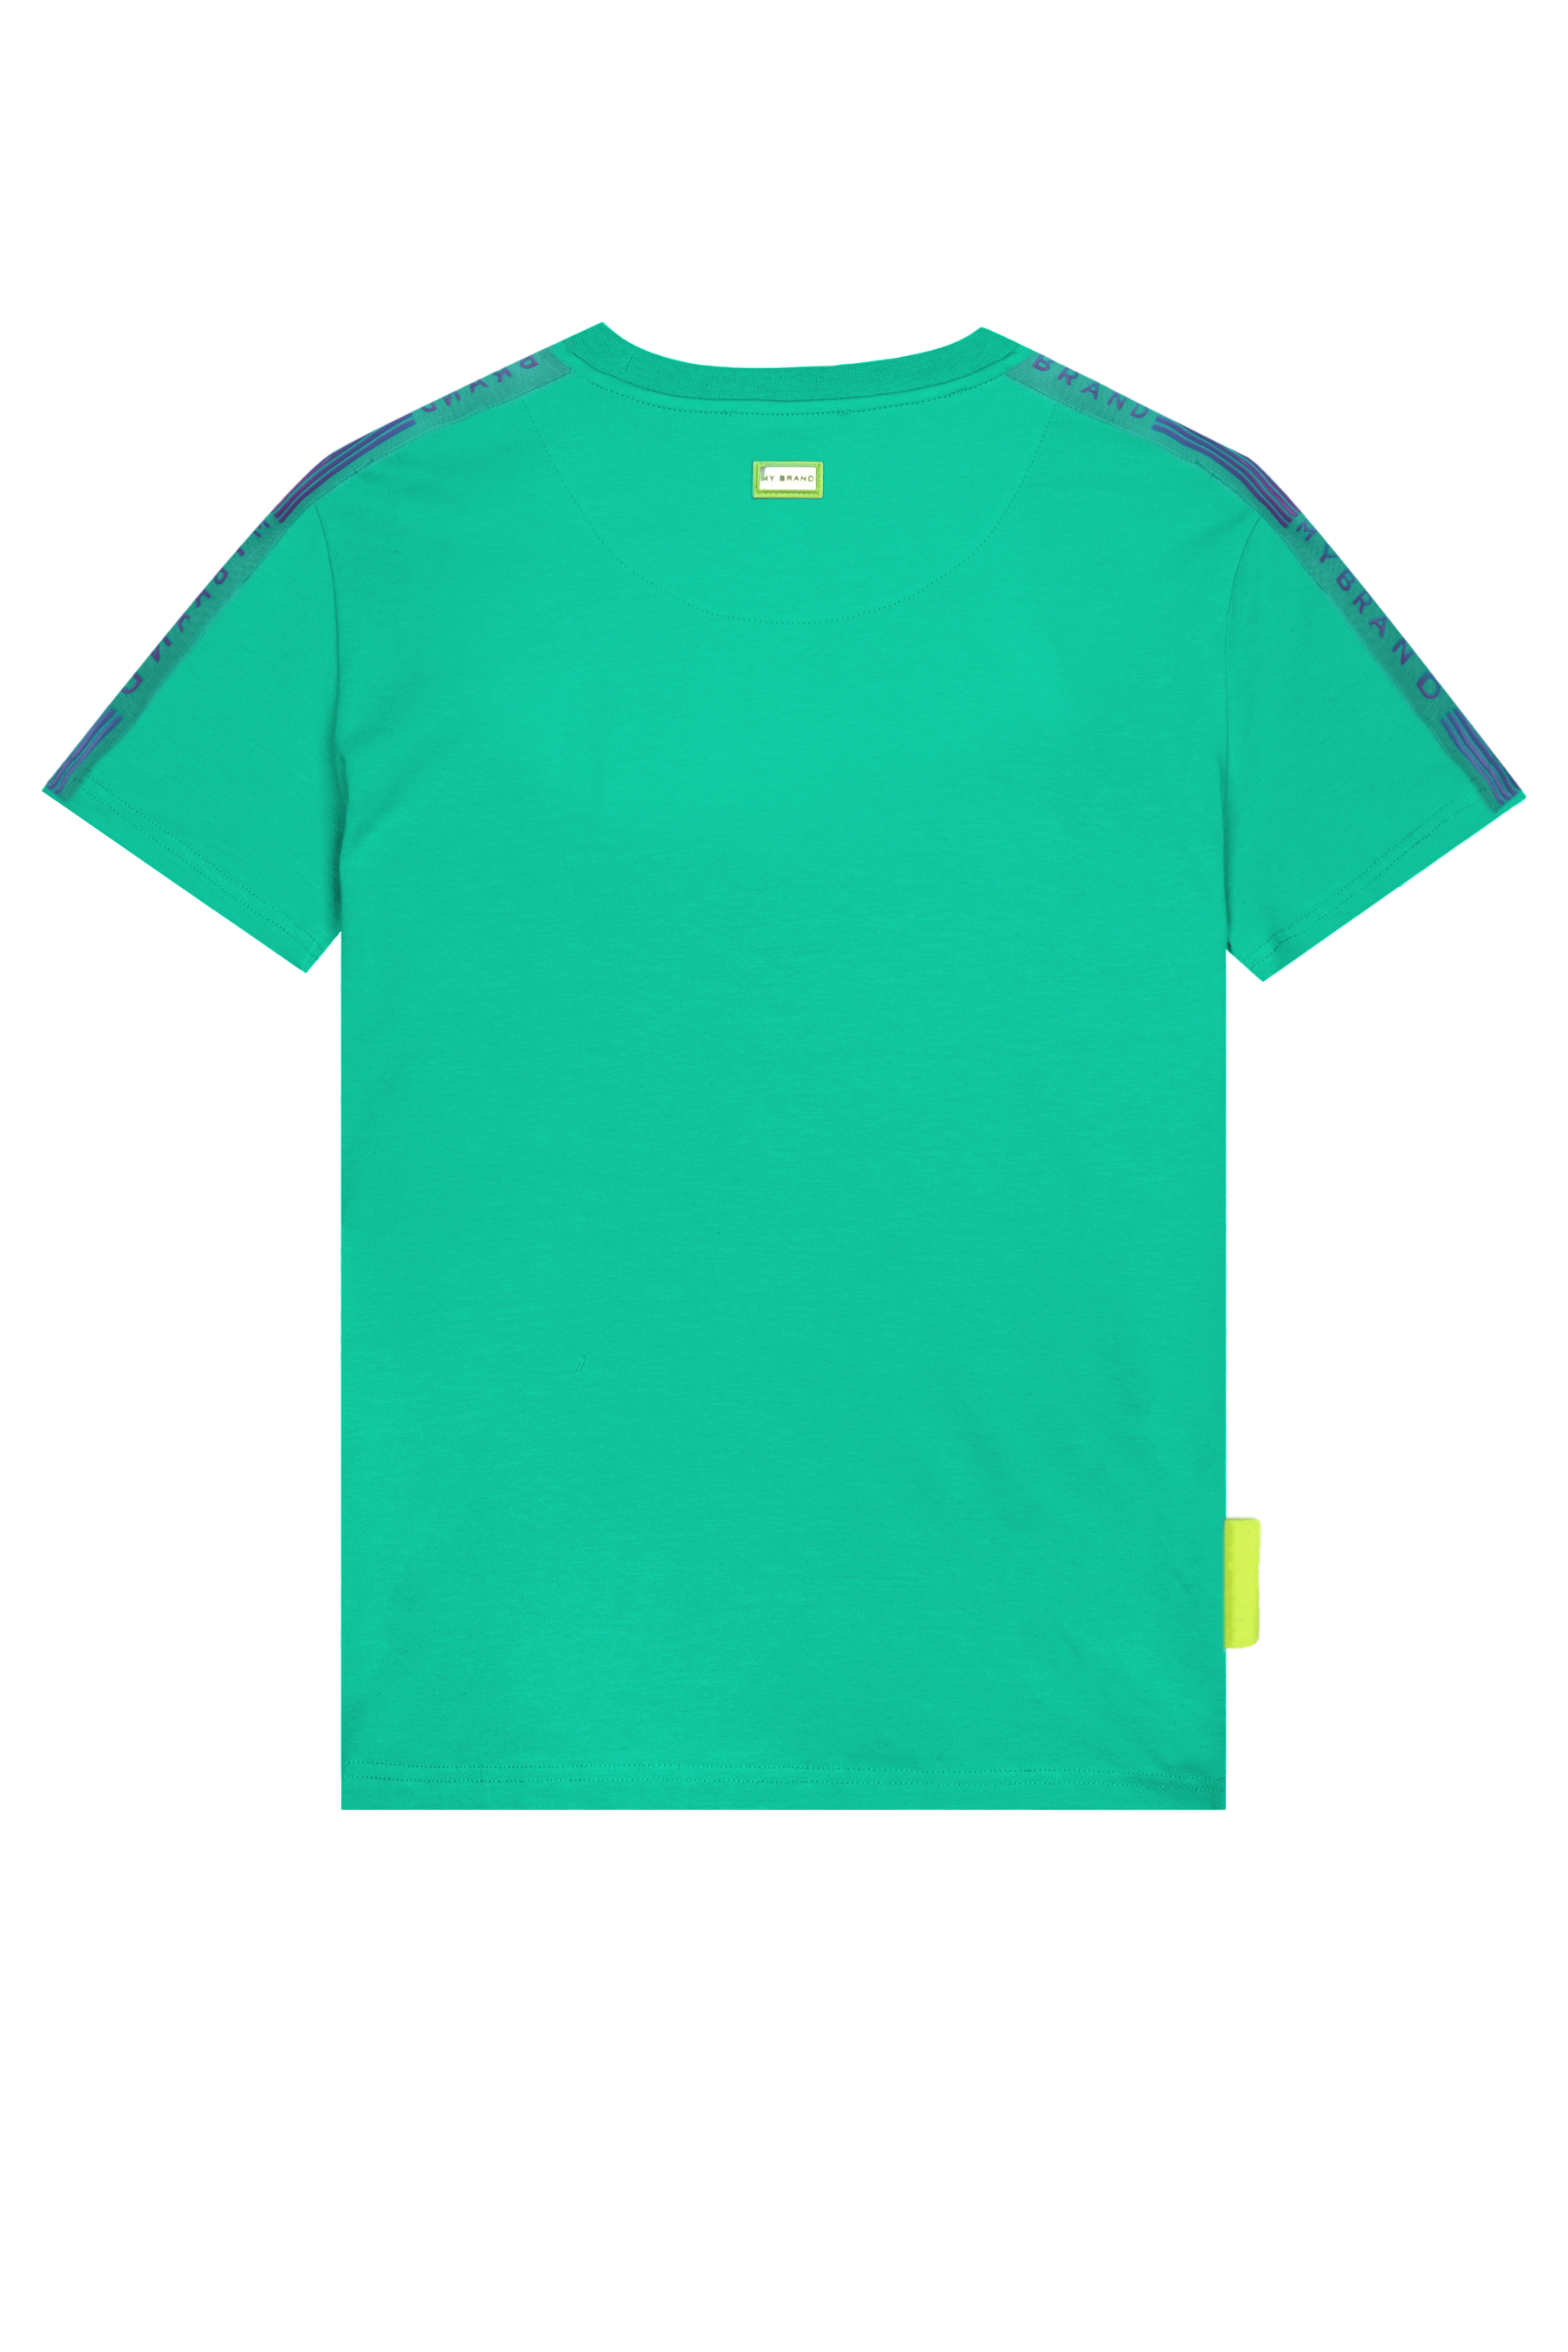 MB Gradient T-Shirt Aquasplash